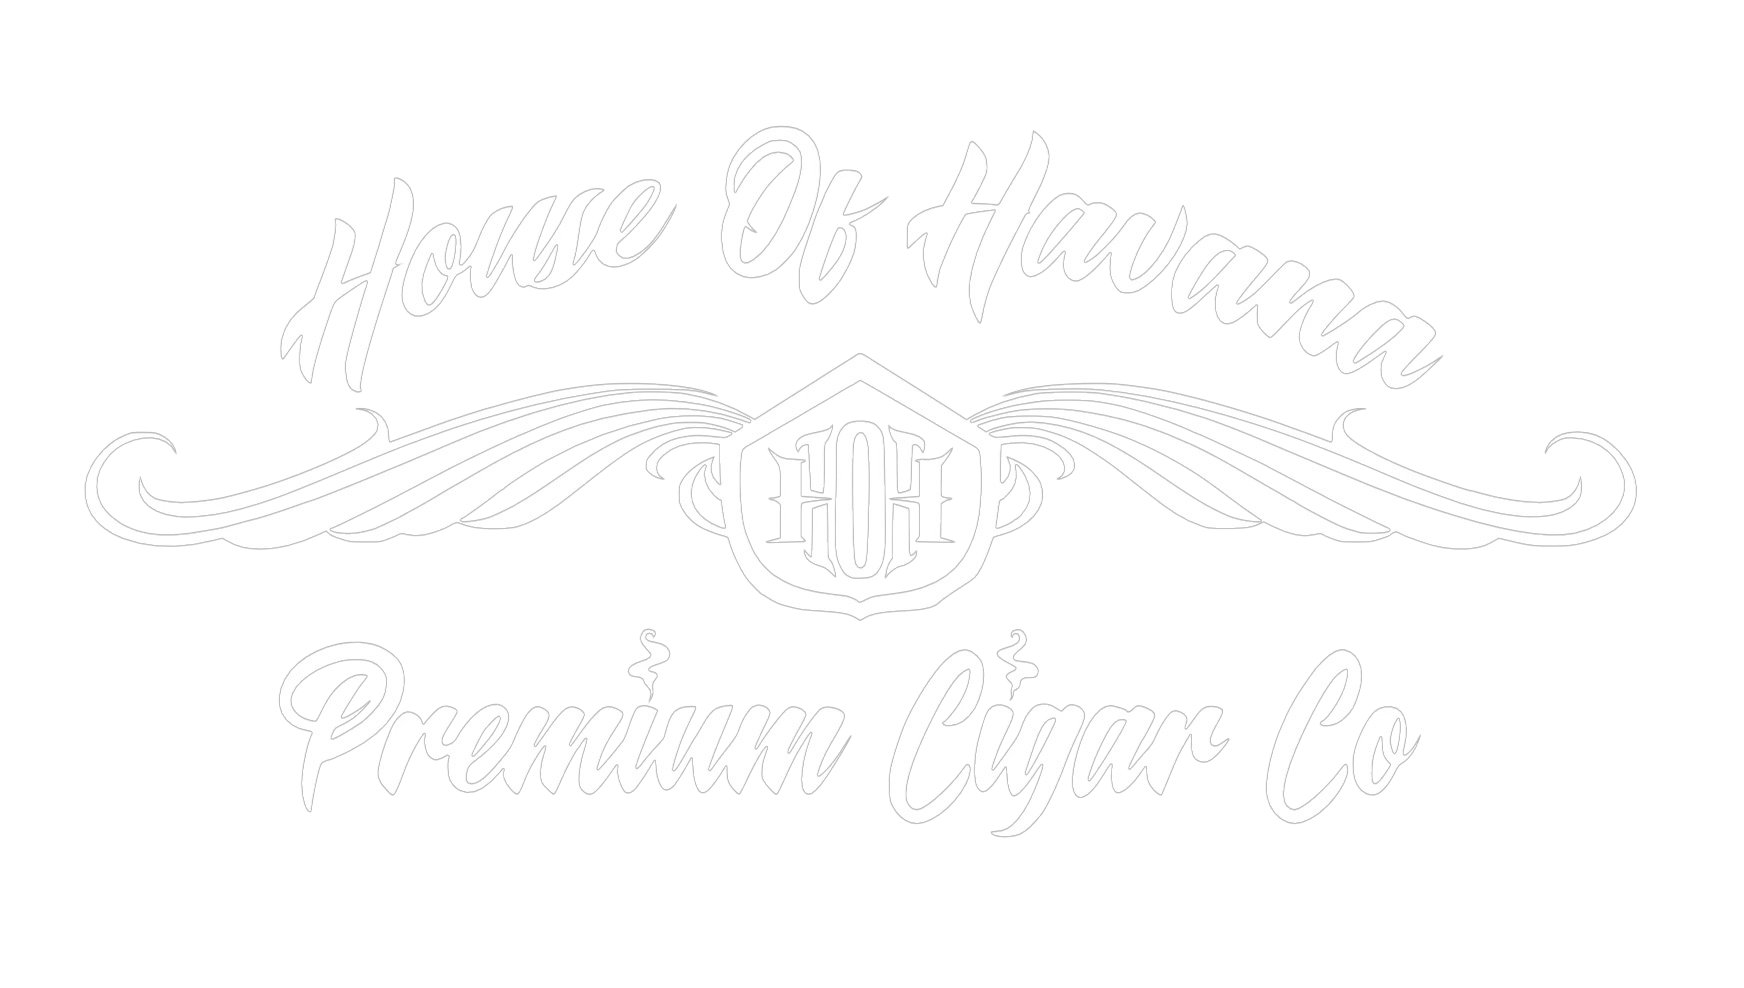 House of Havana